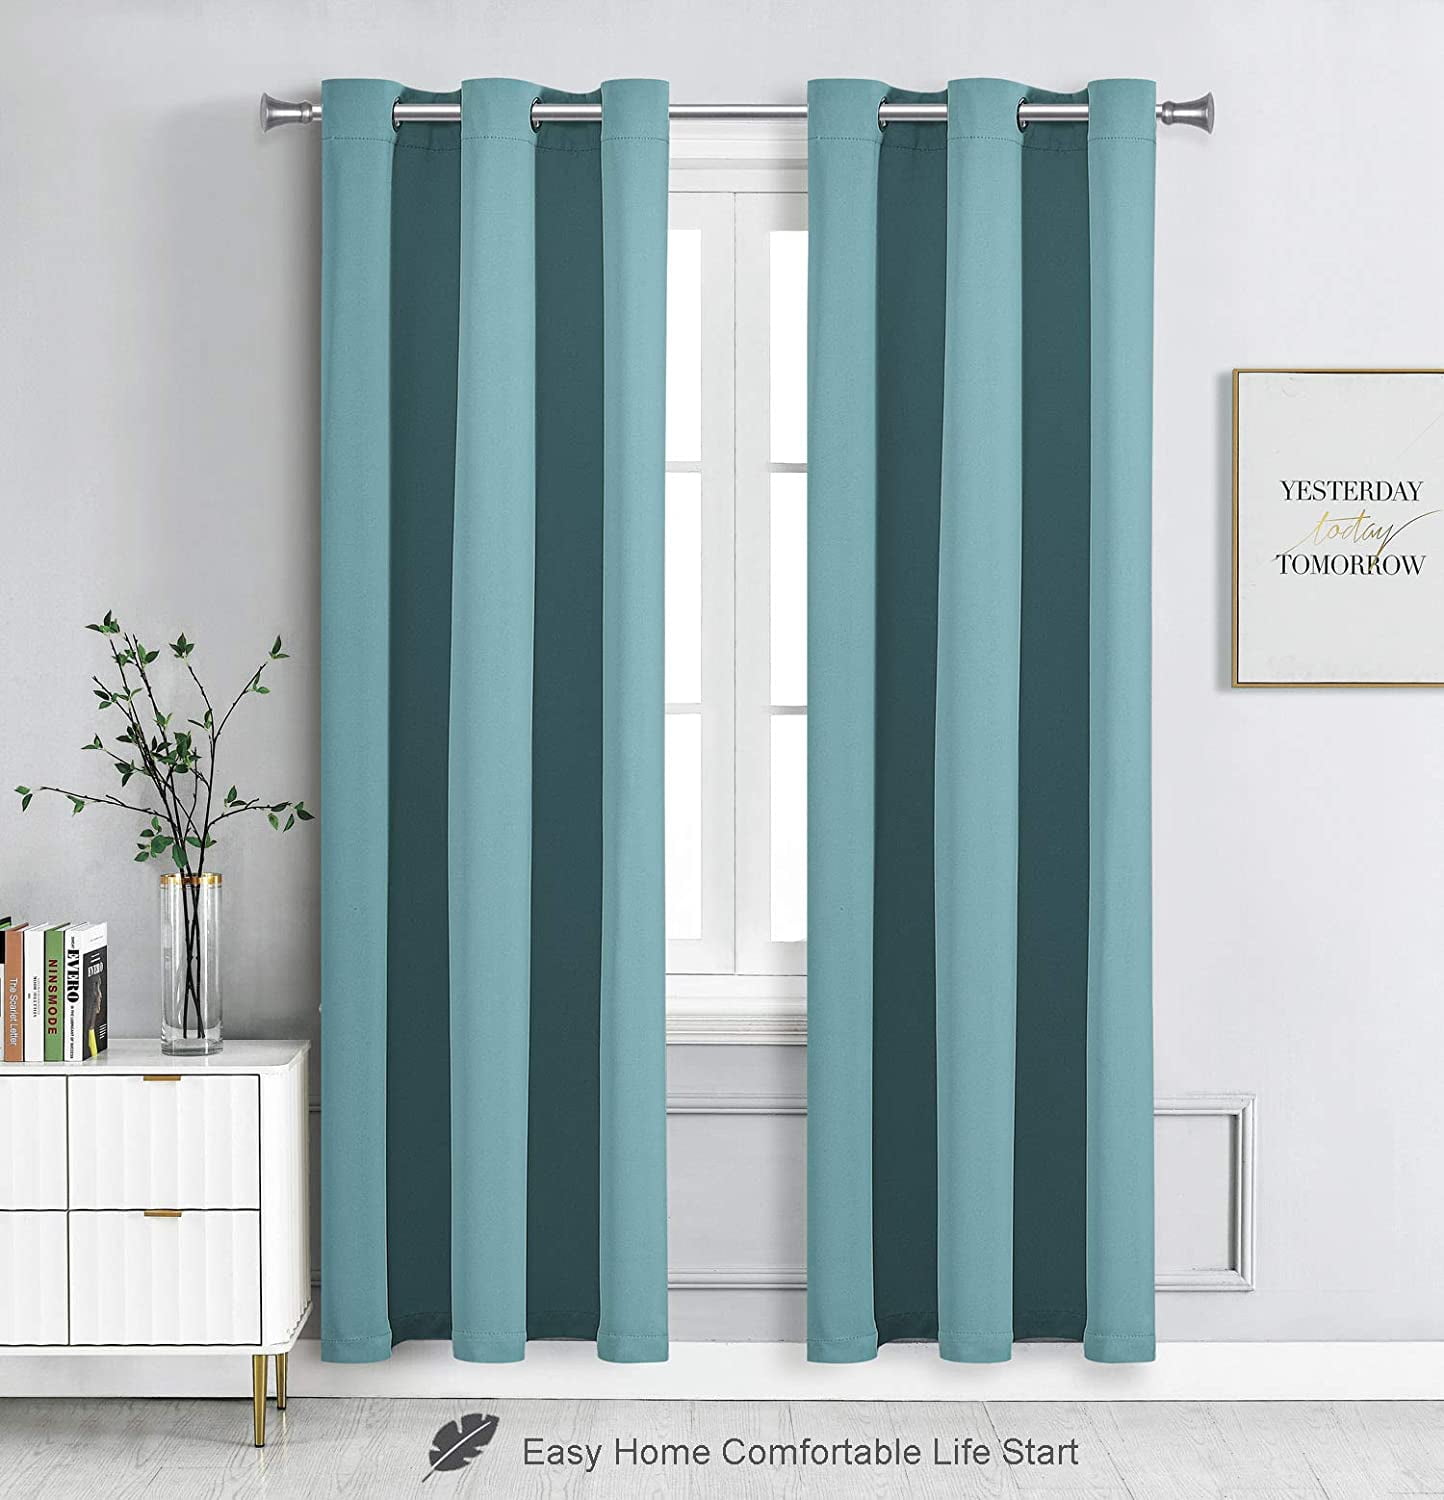 Details about  / 1 Panels Plain Light Gray Blackout Curtains For Bedroom Window Drapes Home Decor